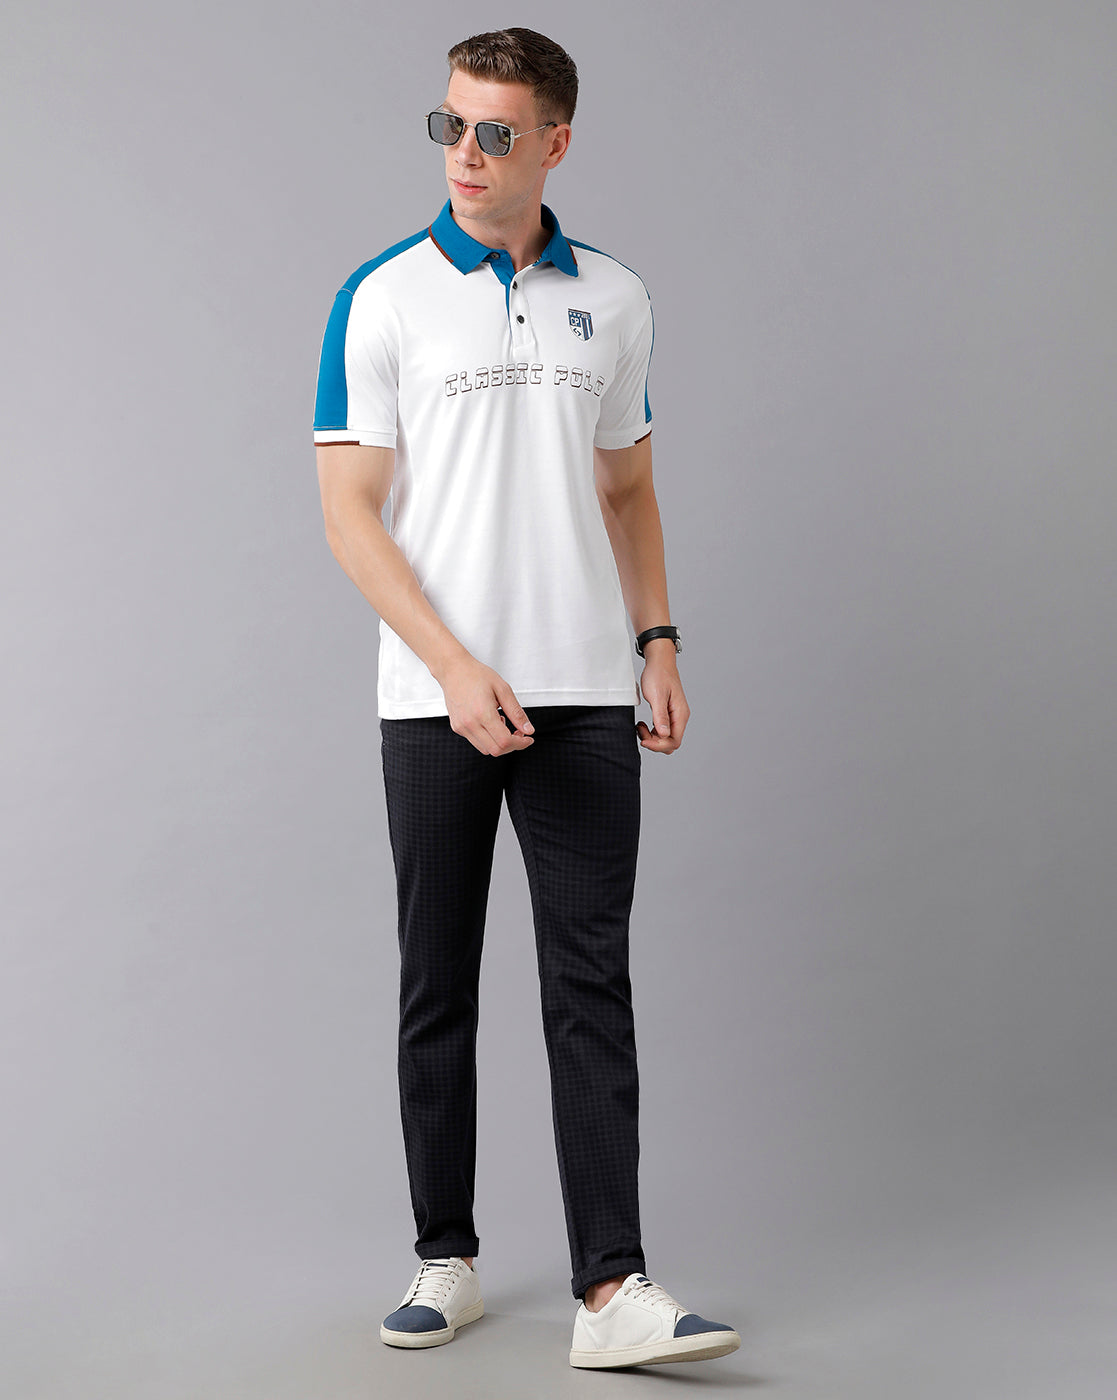 Classic Polo Men's Cotton Printed Half Sleeve Slim Fit Polo Neck White Color T-Shirt | Prm - 730 A